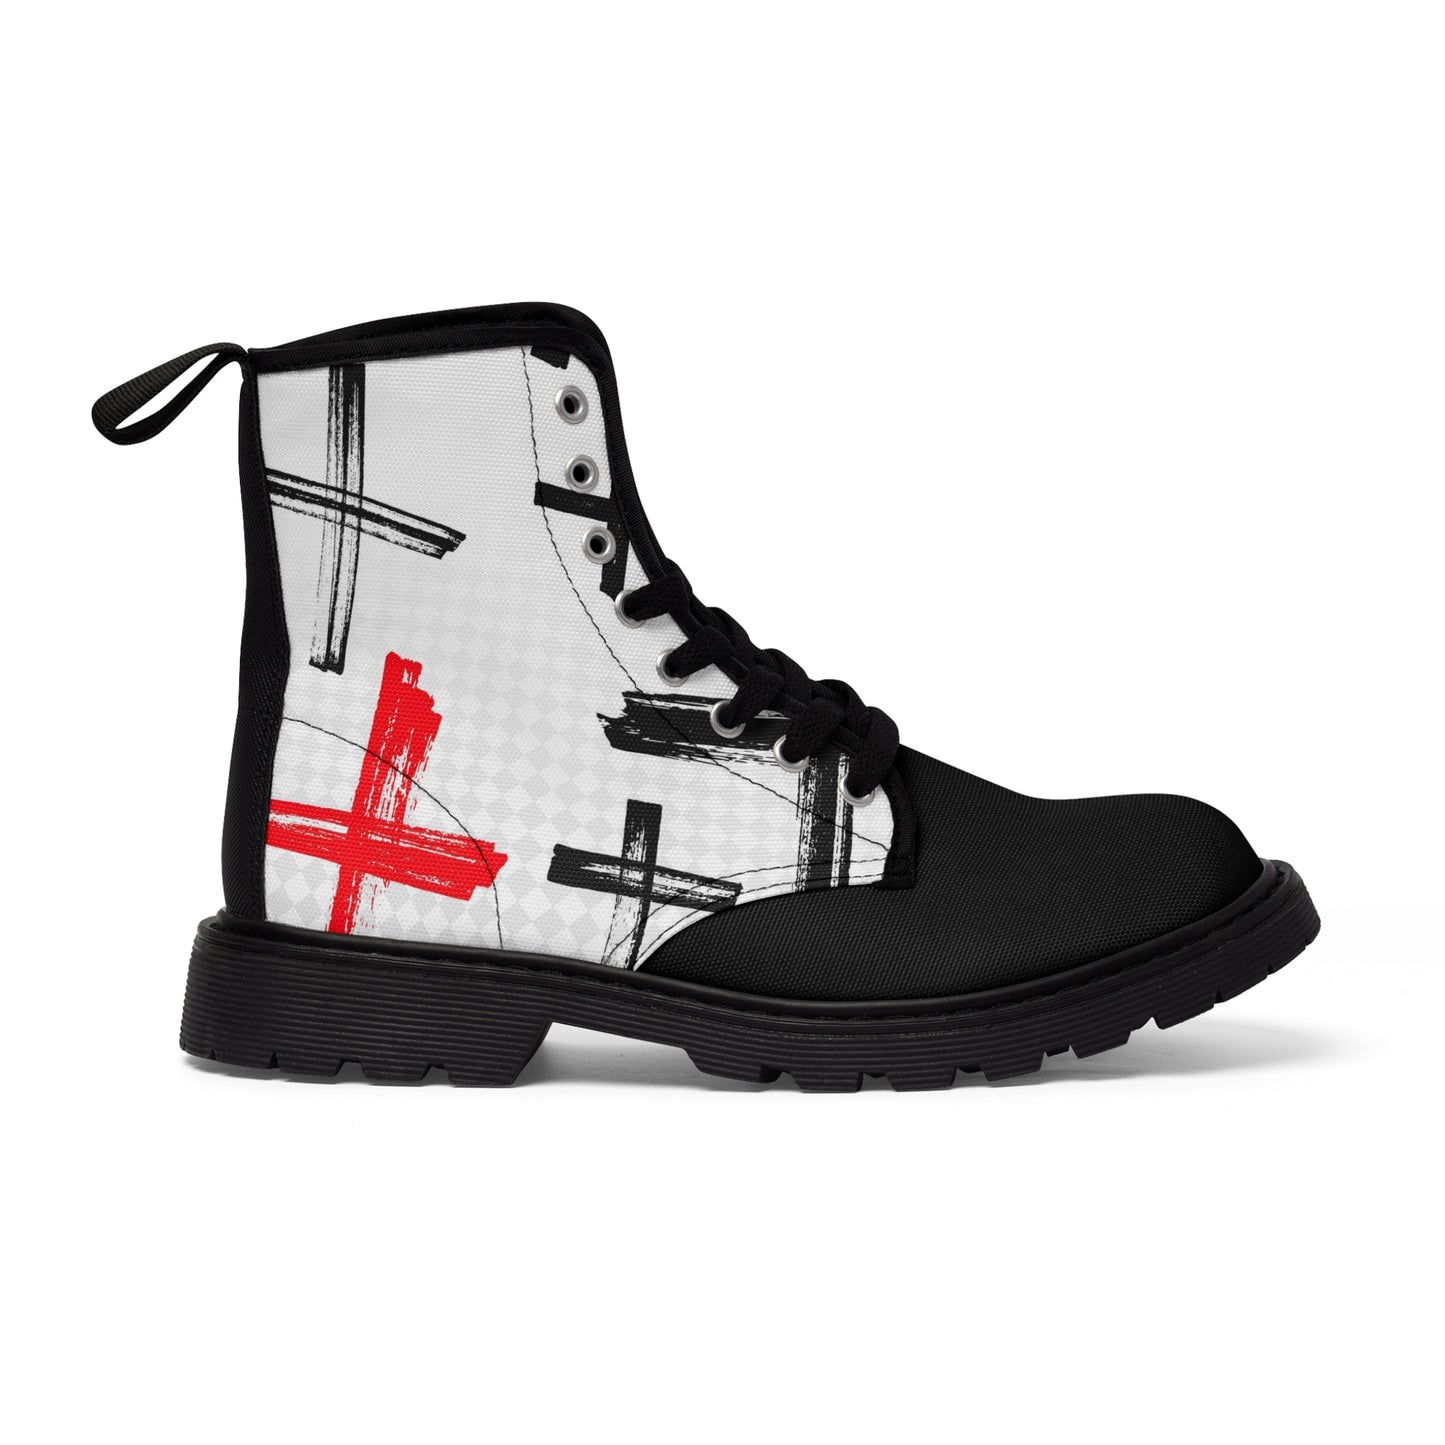 Ableiva -"Faithful Footsteps” Cross Boots